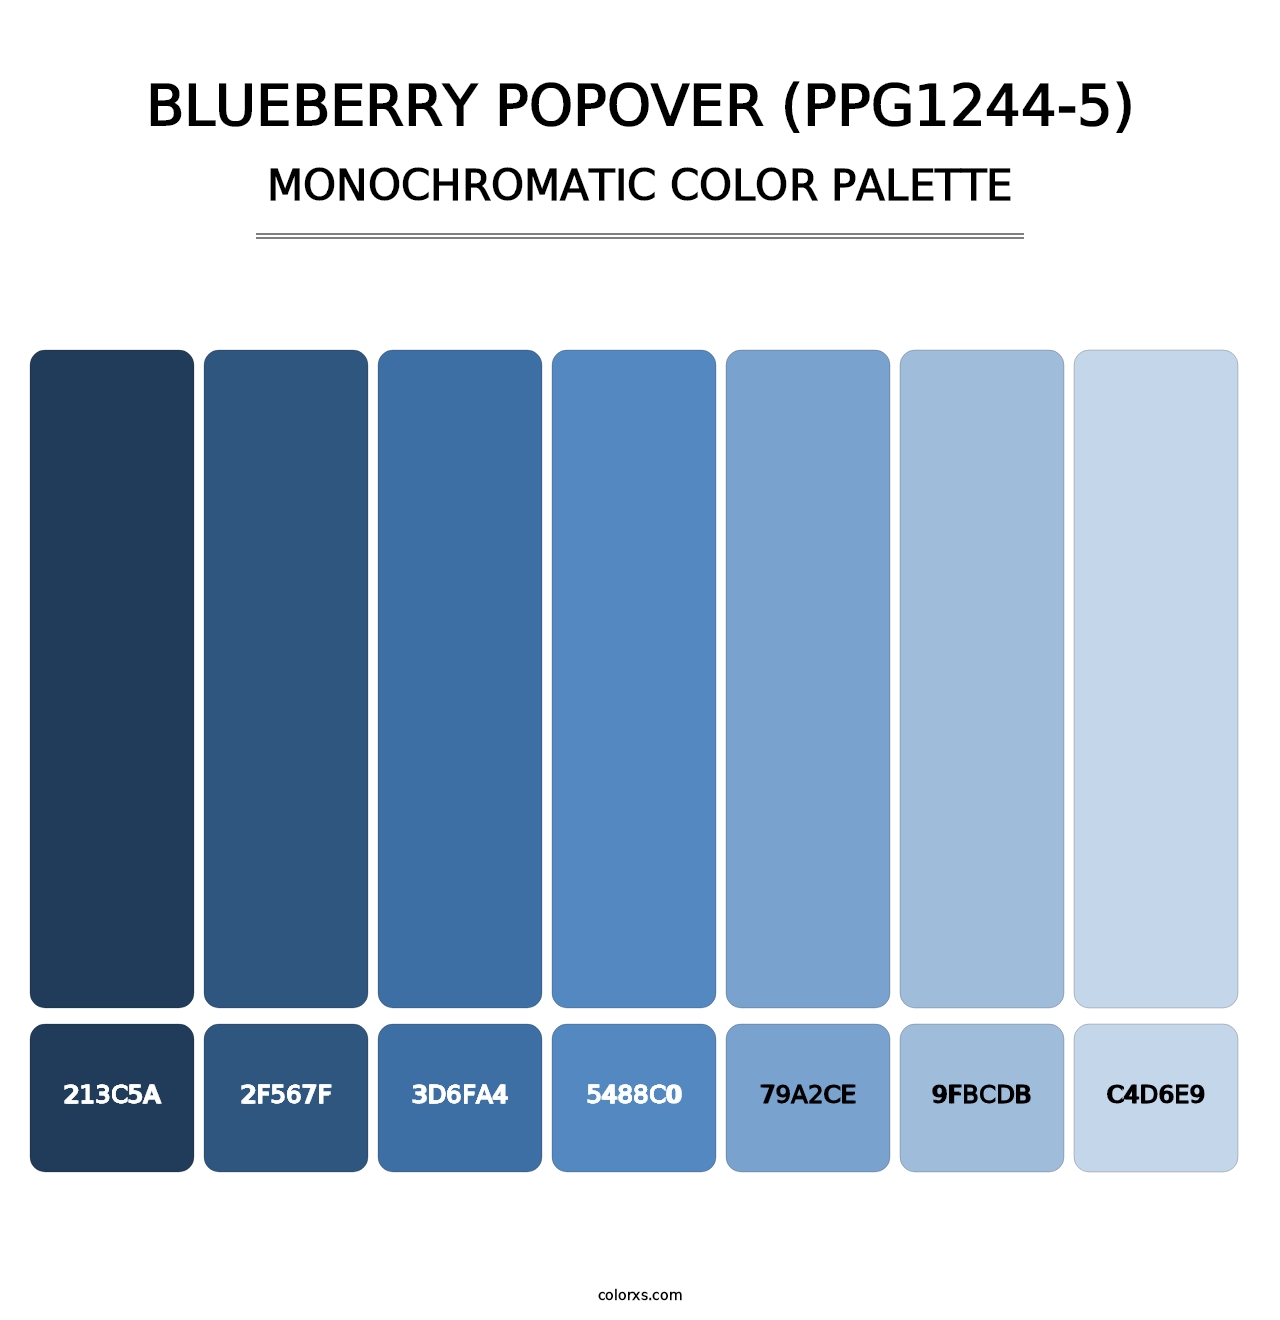 Blueberry Popover (PPG1244-5) - Monochromatic Color Palette